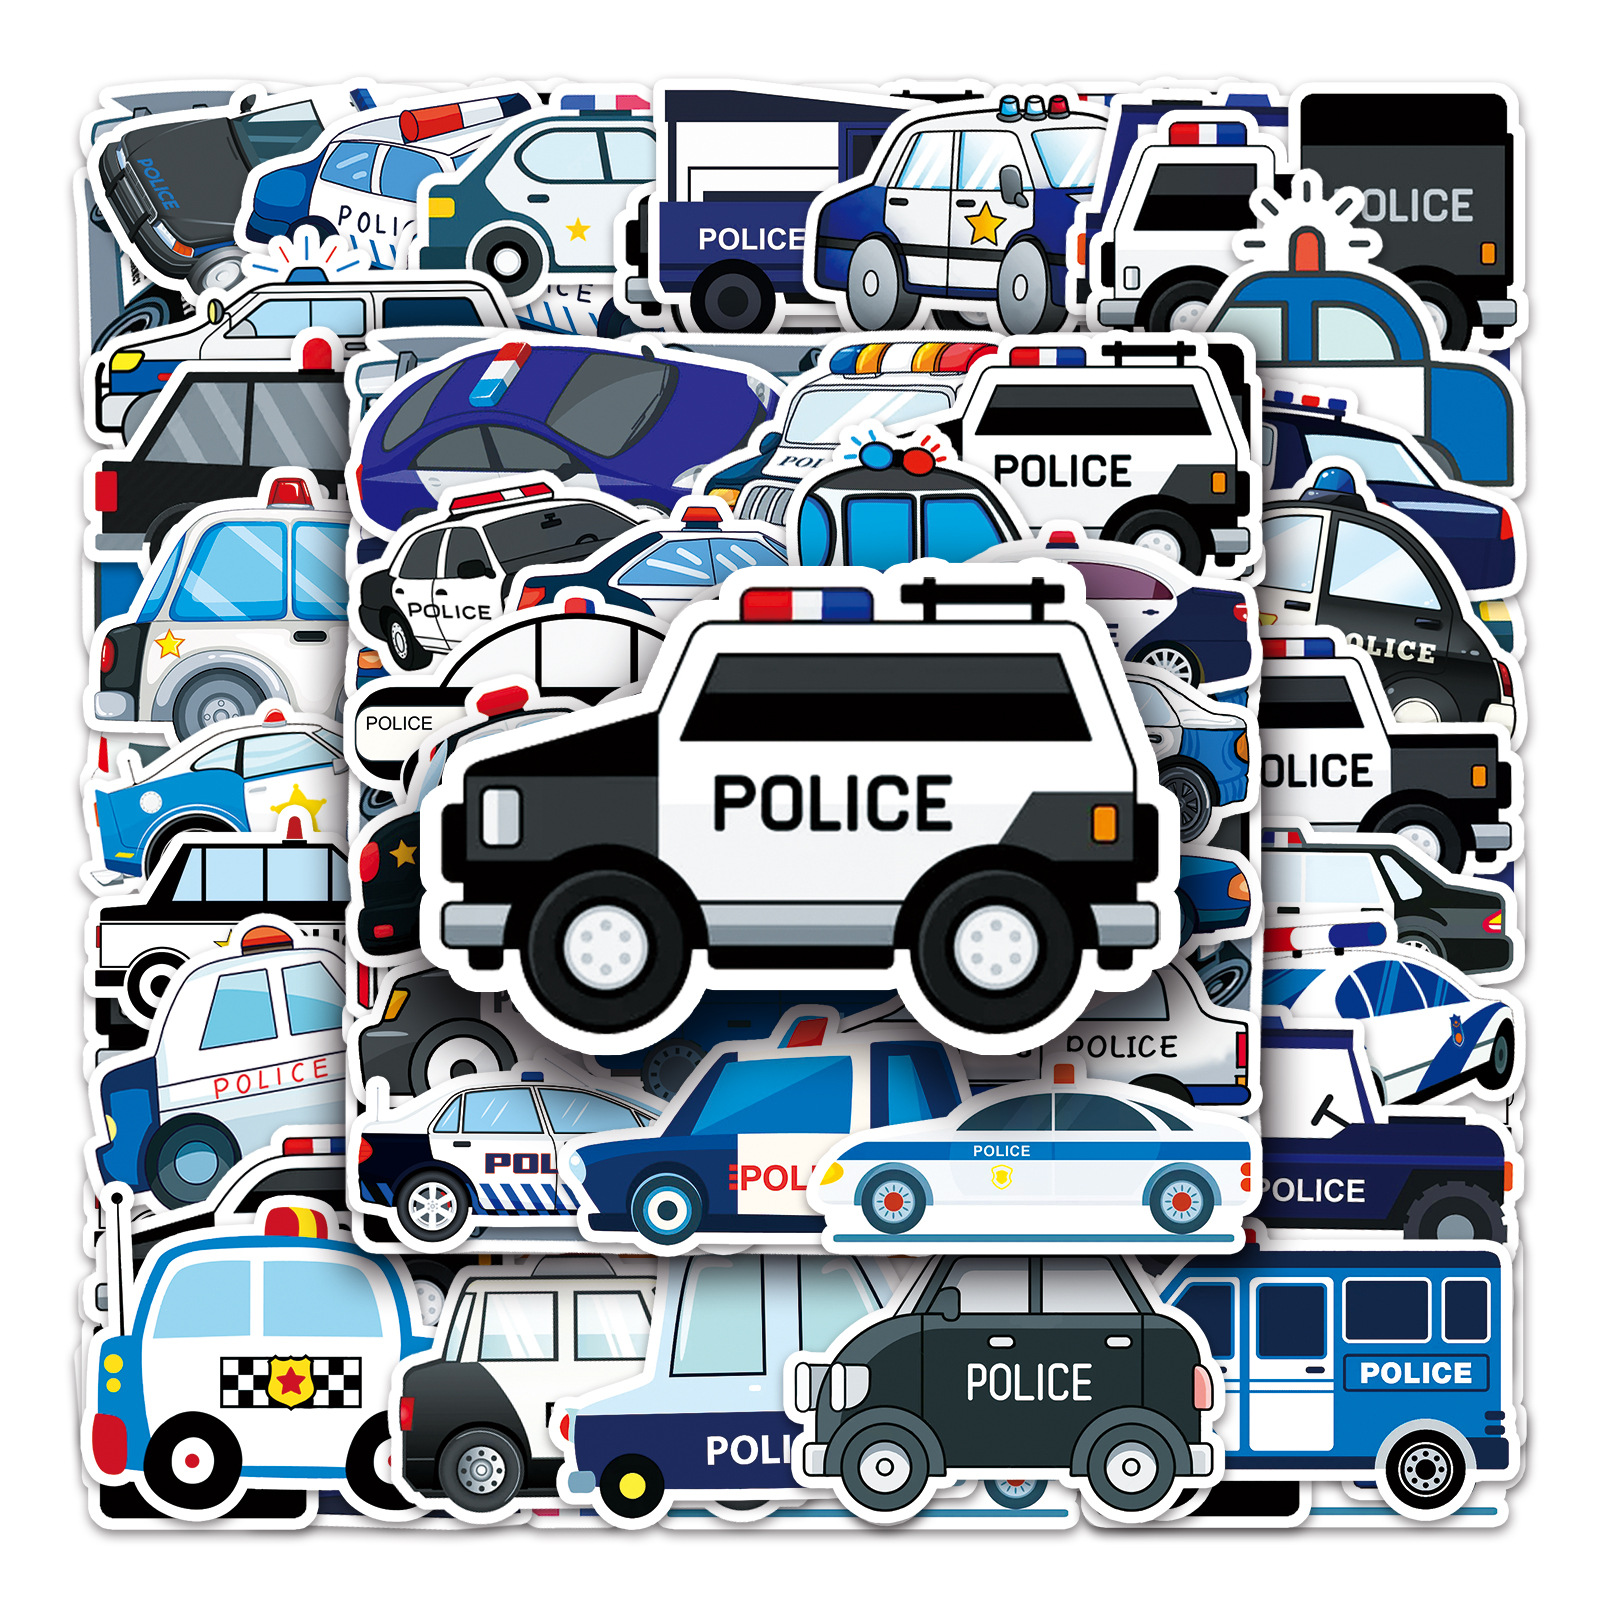 Polizei Sticker for Sale by Edinimed